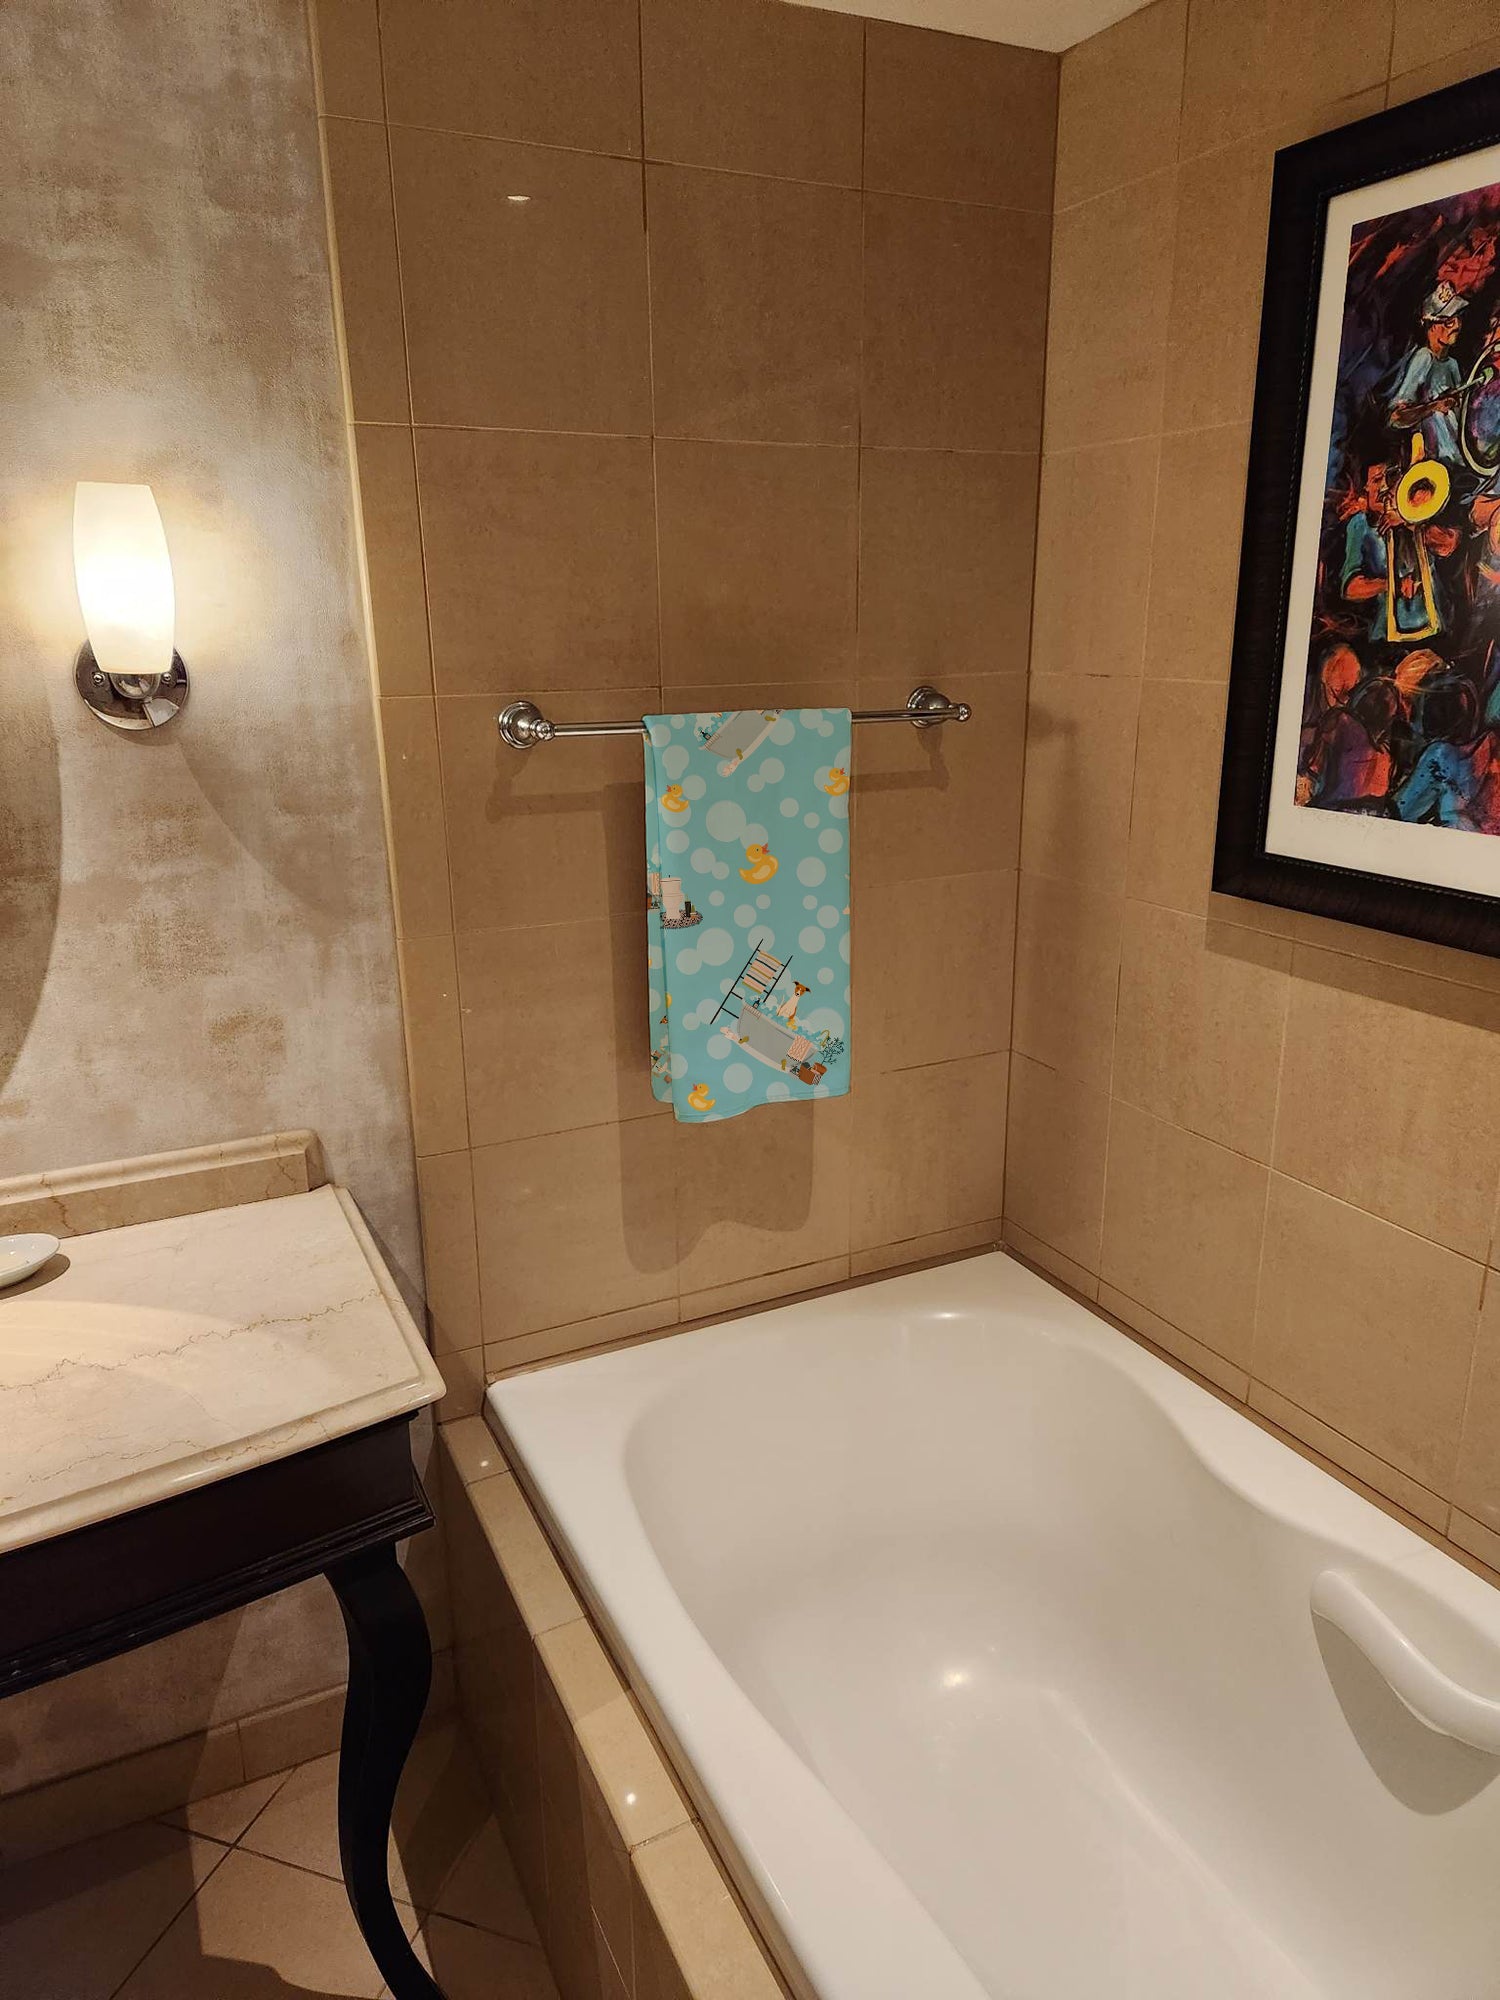 Whippet in Bathtub Bath Towel Large